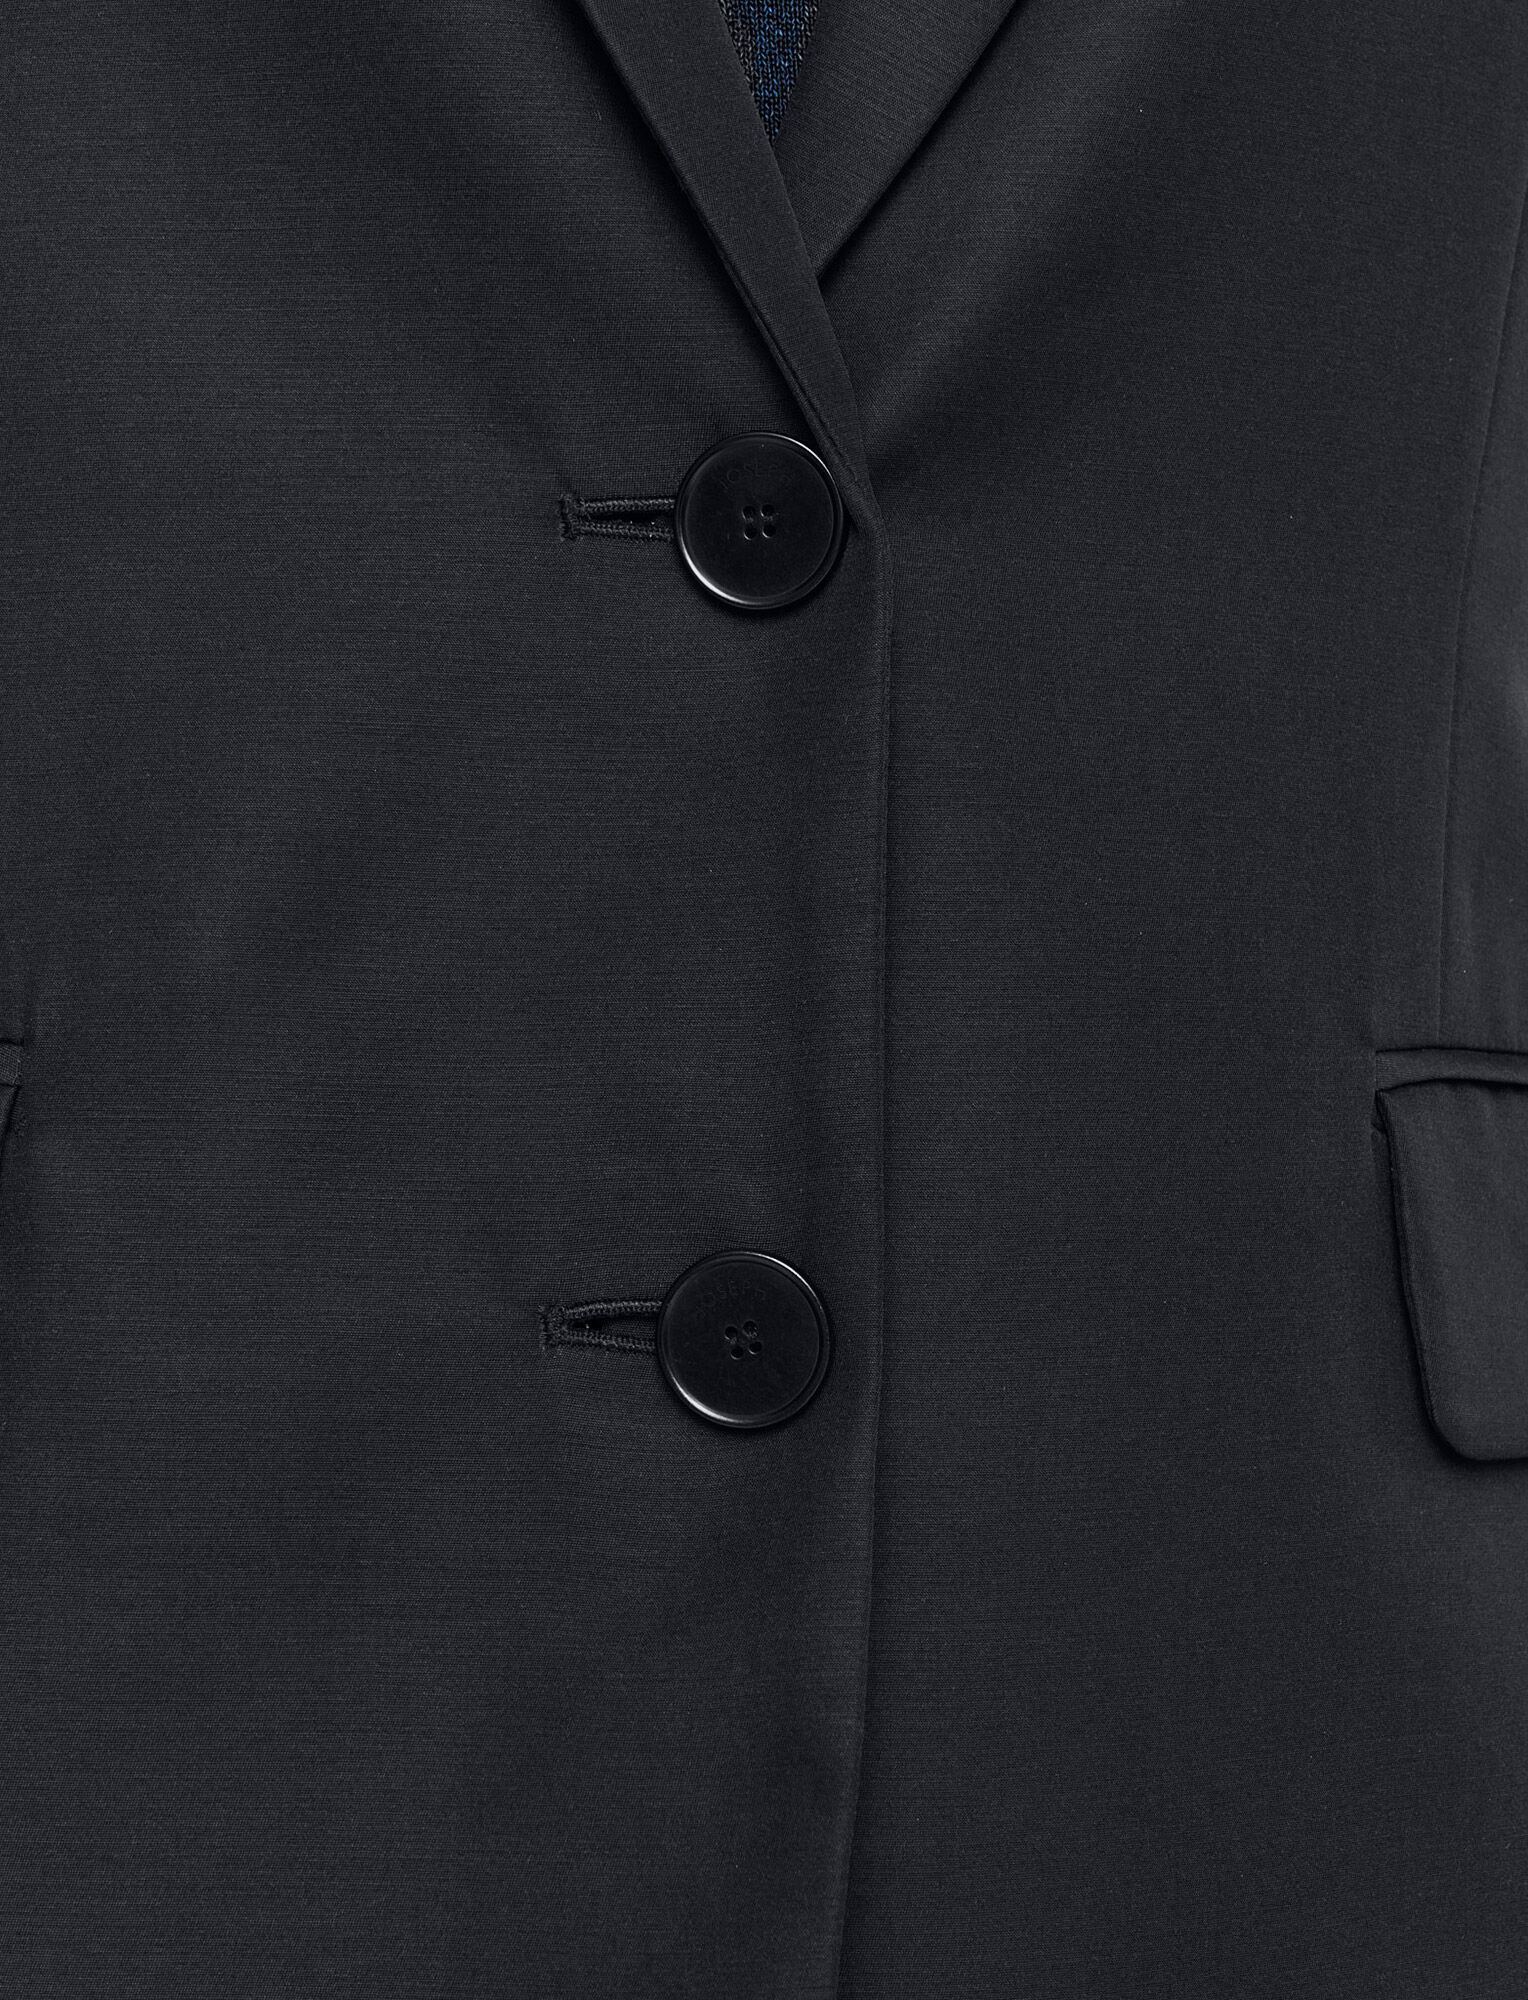 Joseph, Soft Cotton Silk Belmore Jacket, in Navy